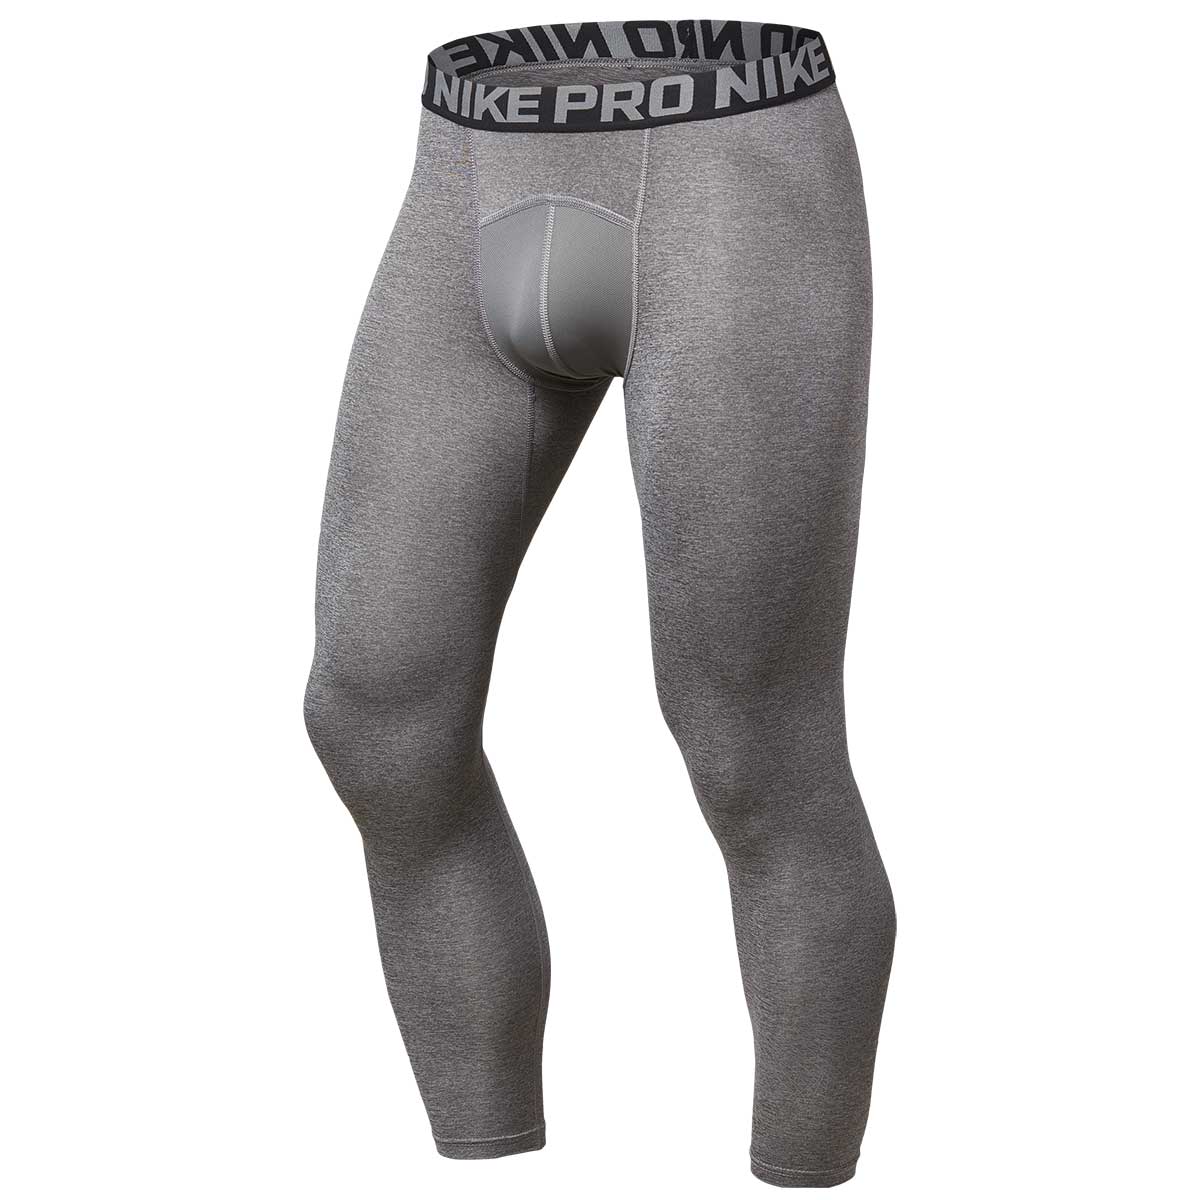 nike pro combat compression leggings